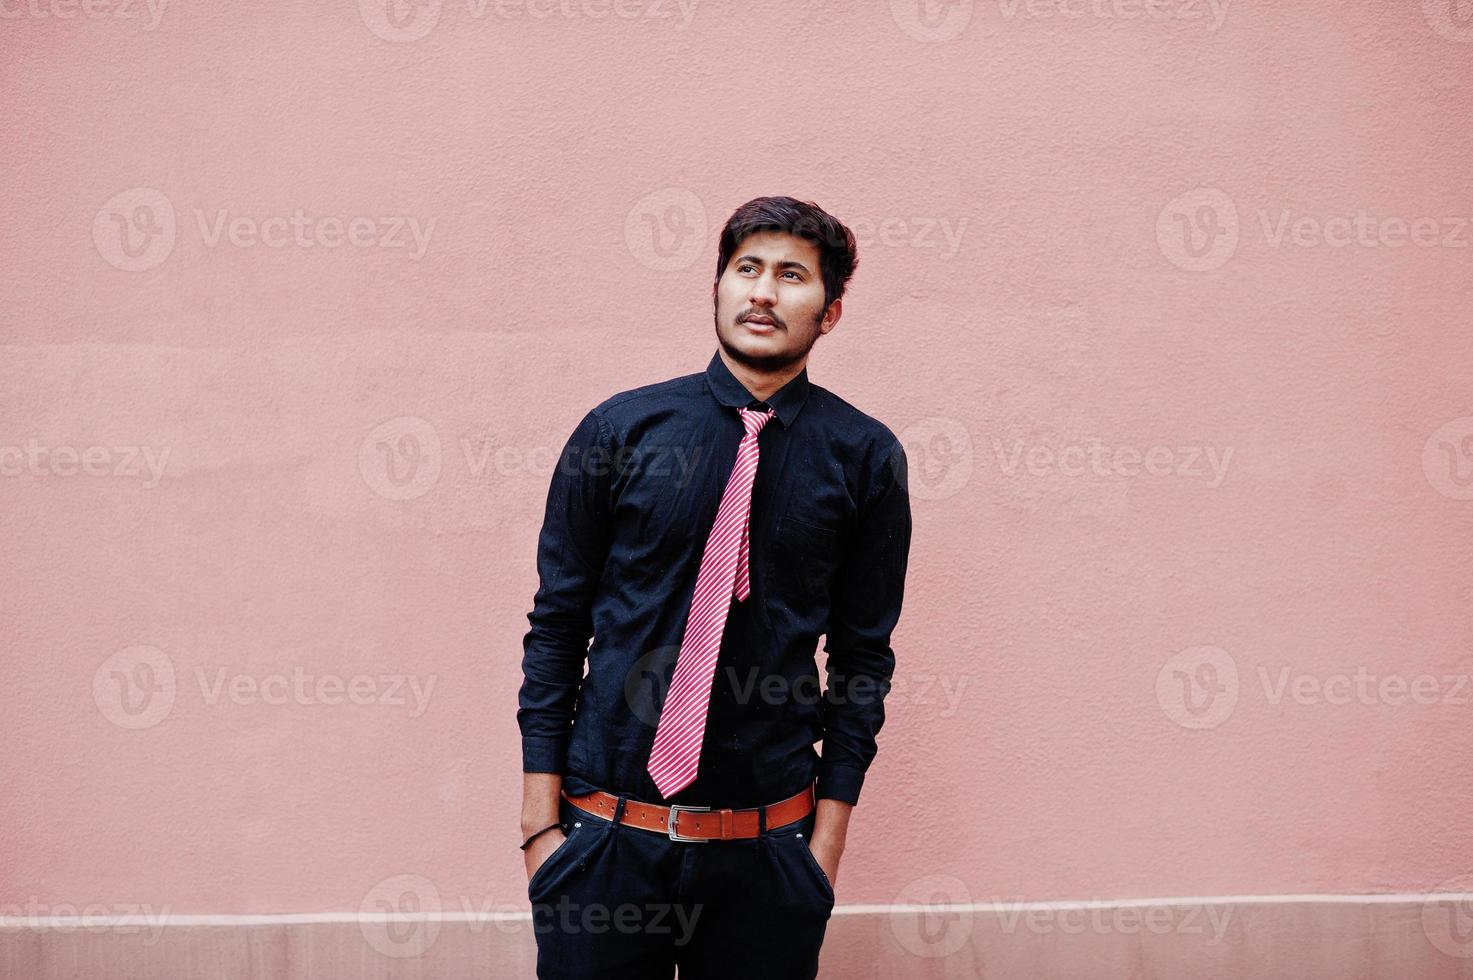 jovem indiano de camisa preta e gravata posou contra a parede rosa. foto